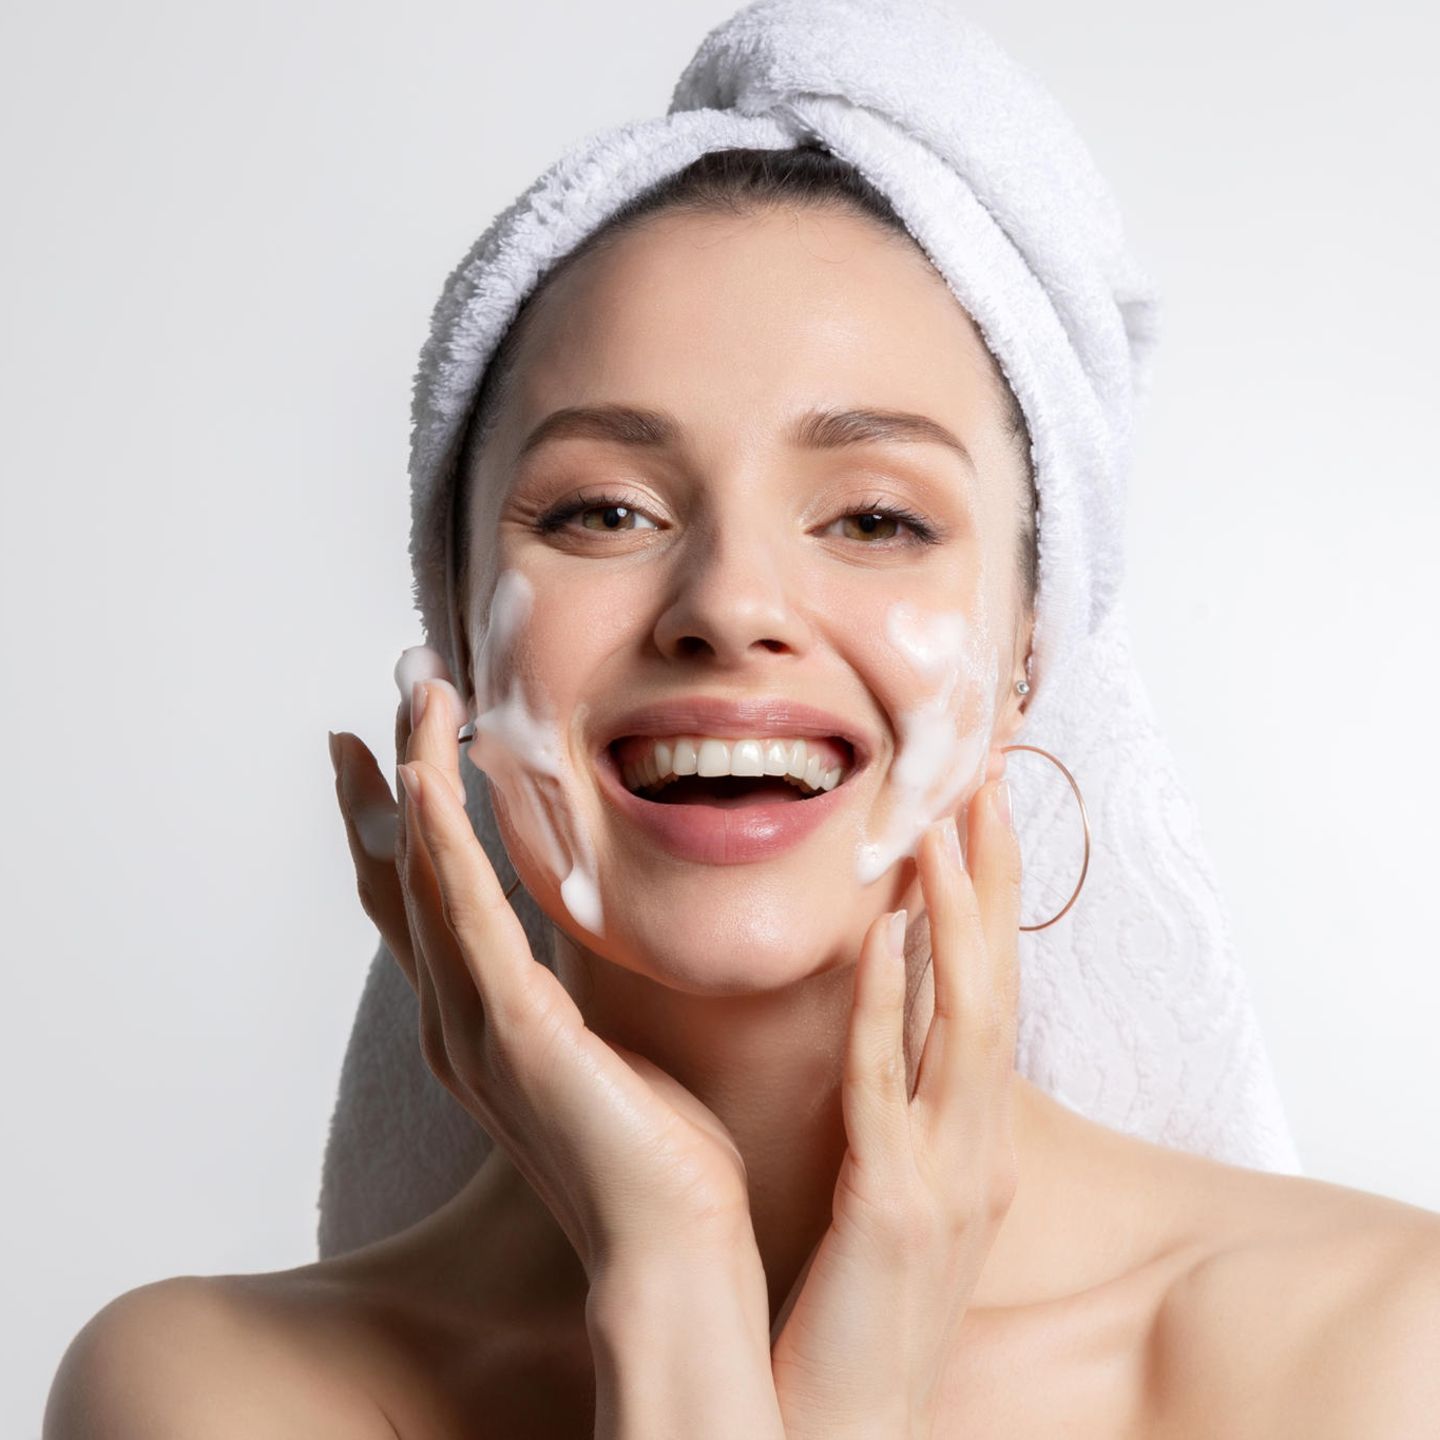 Moisturizer: woman creams face, facial care